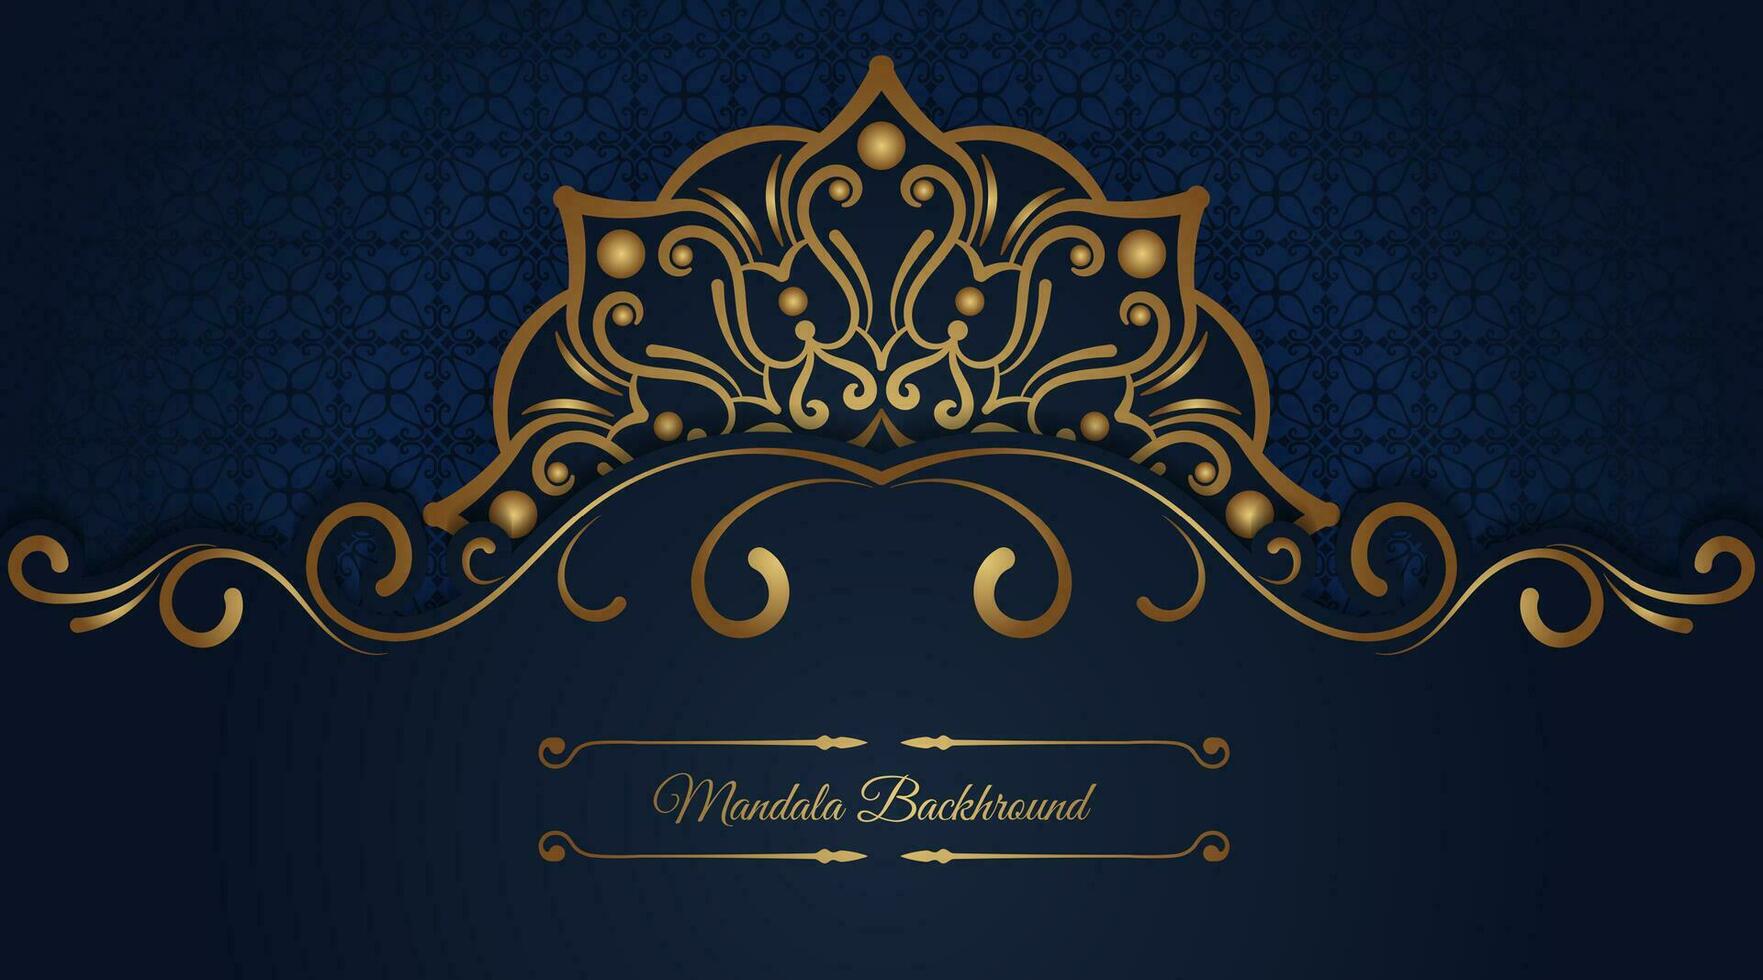 Luxury background, with golden mandala vector